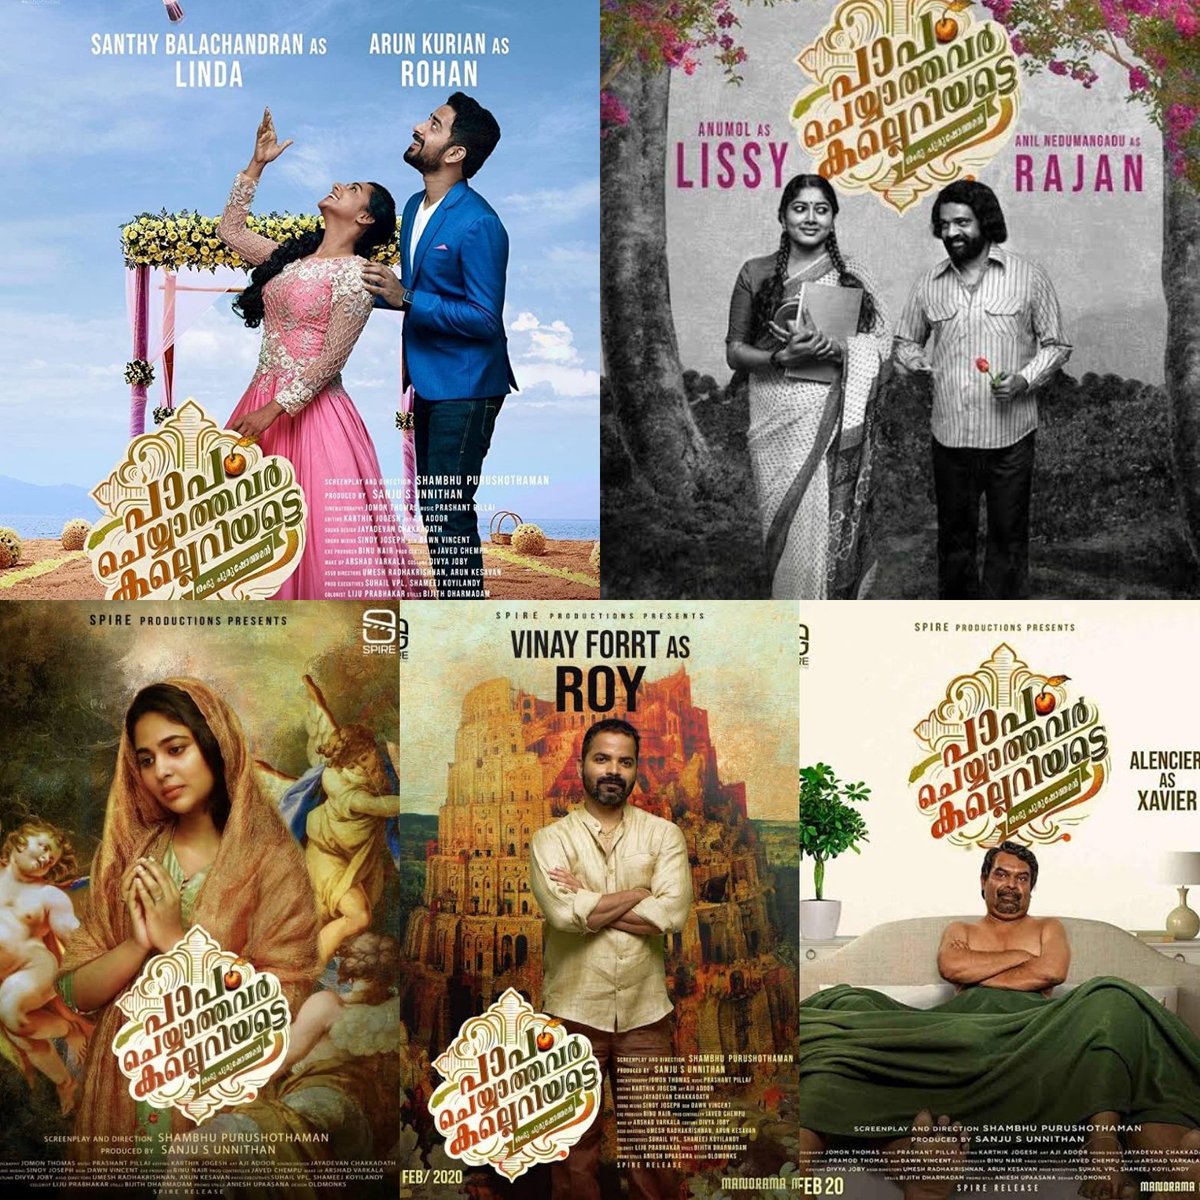 Malayalam film #PaapamCheyyathavarKalleriyatte (2020) by #ShambhuPurushothaman, feat. @Indrajith_S #VinayForrt #TinyTom @srindaa #SanthyBalachandran @arunkurian #Alencier and #Anumol, now streaming on @PrimeVideoIN.

@iamthomasaj @Manorama_Music